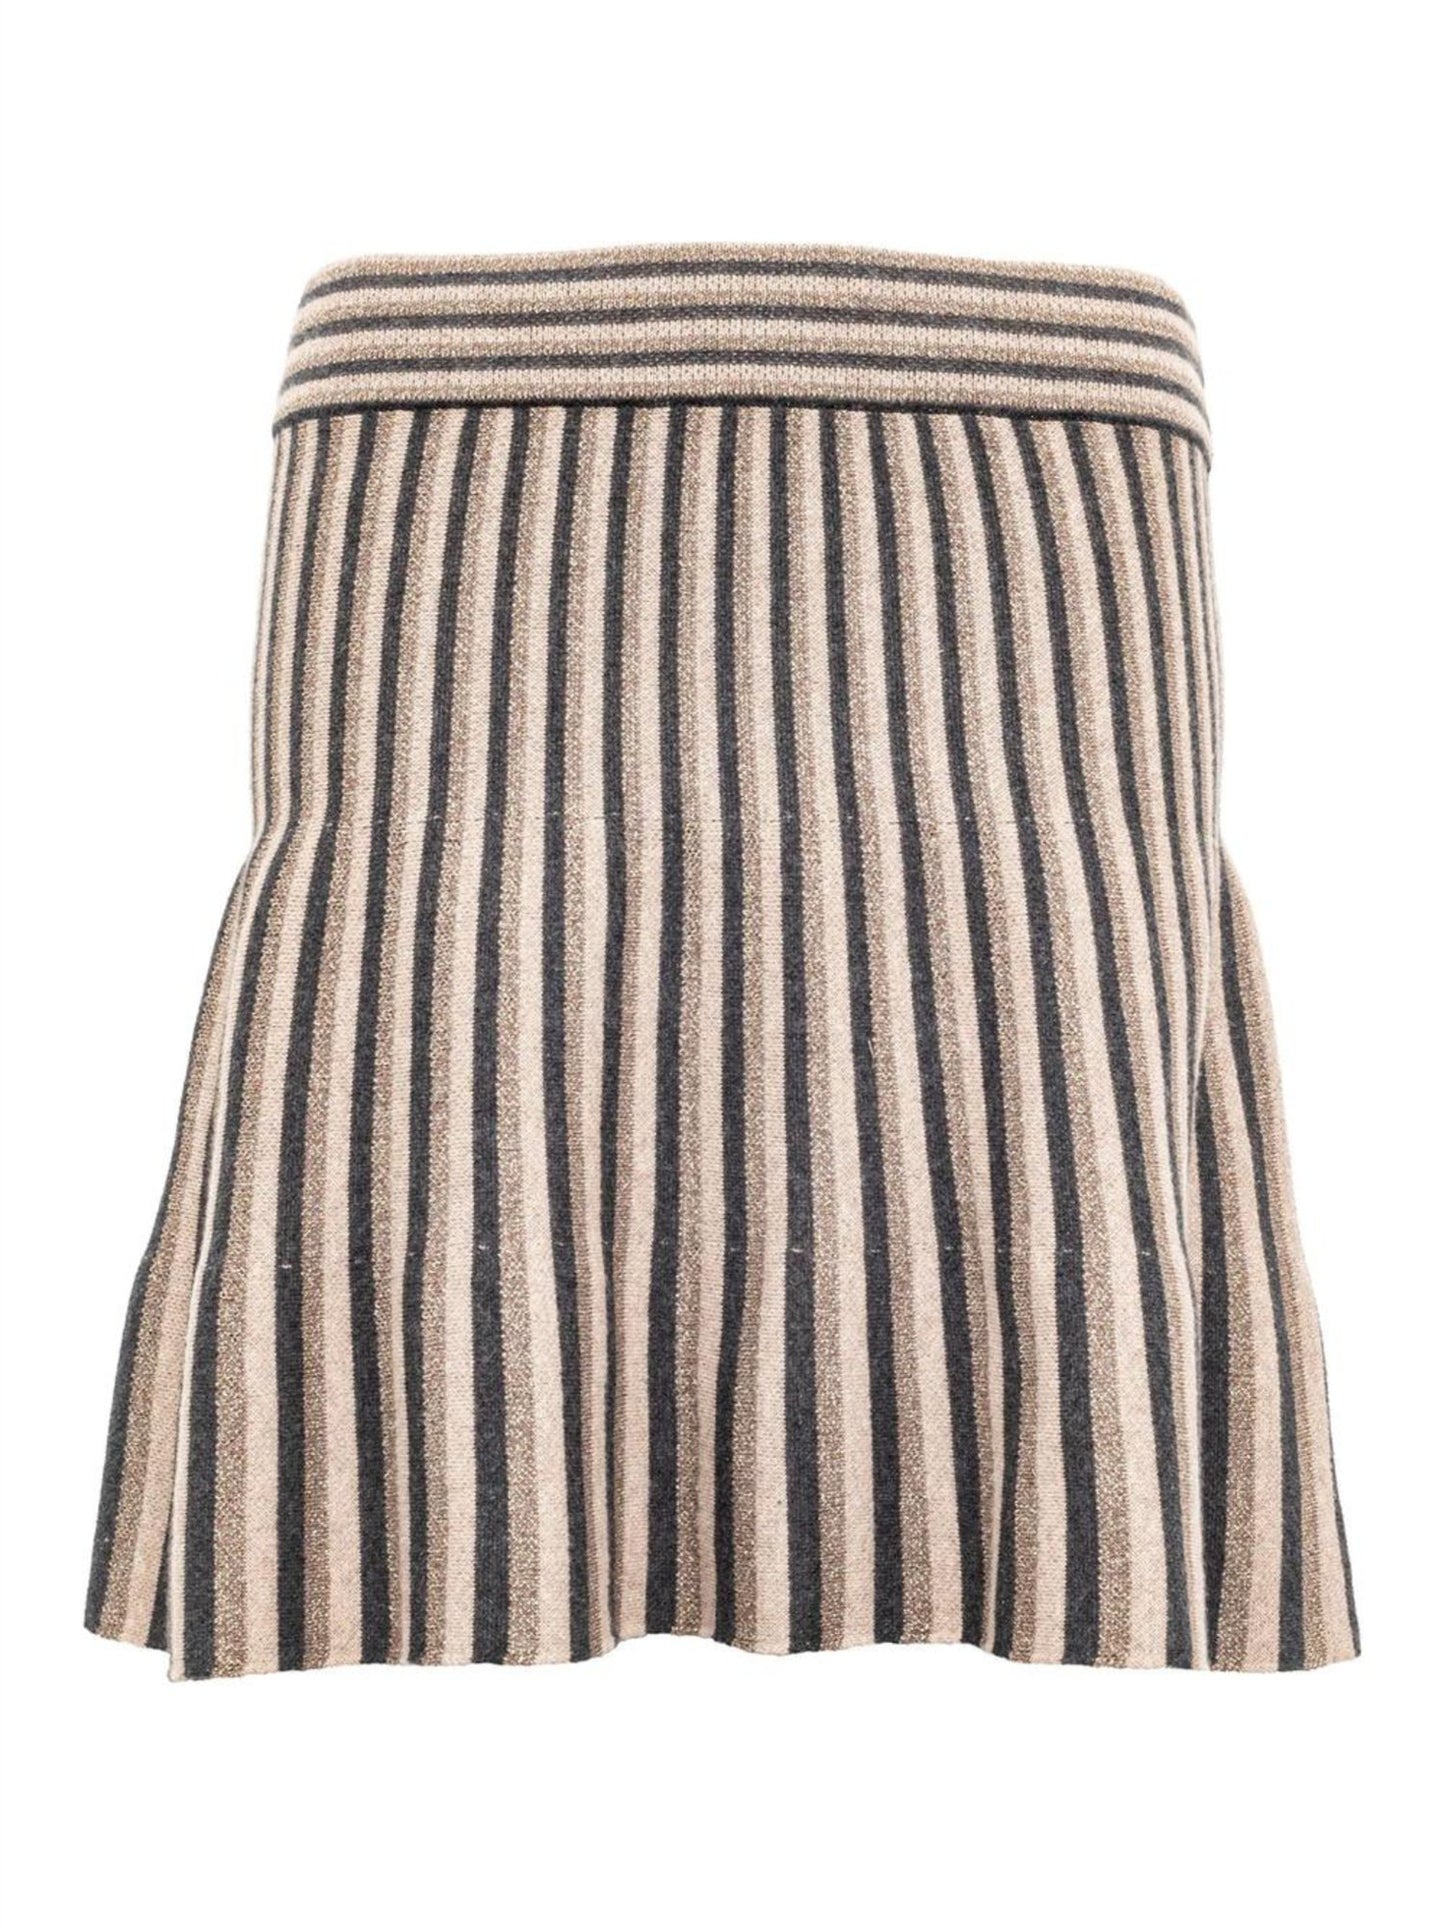 Stripe Skirt - Stripe - at home